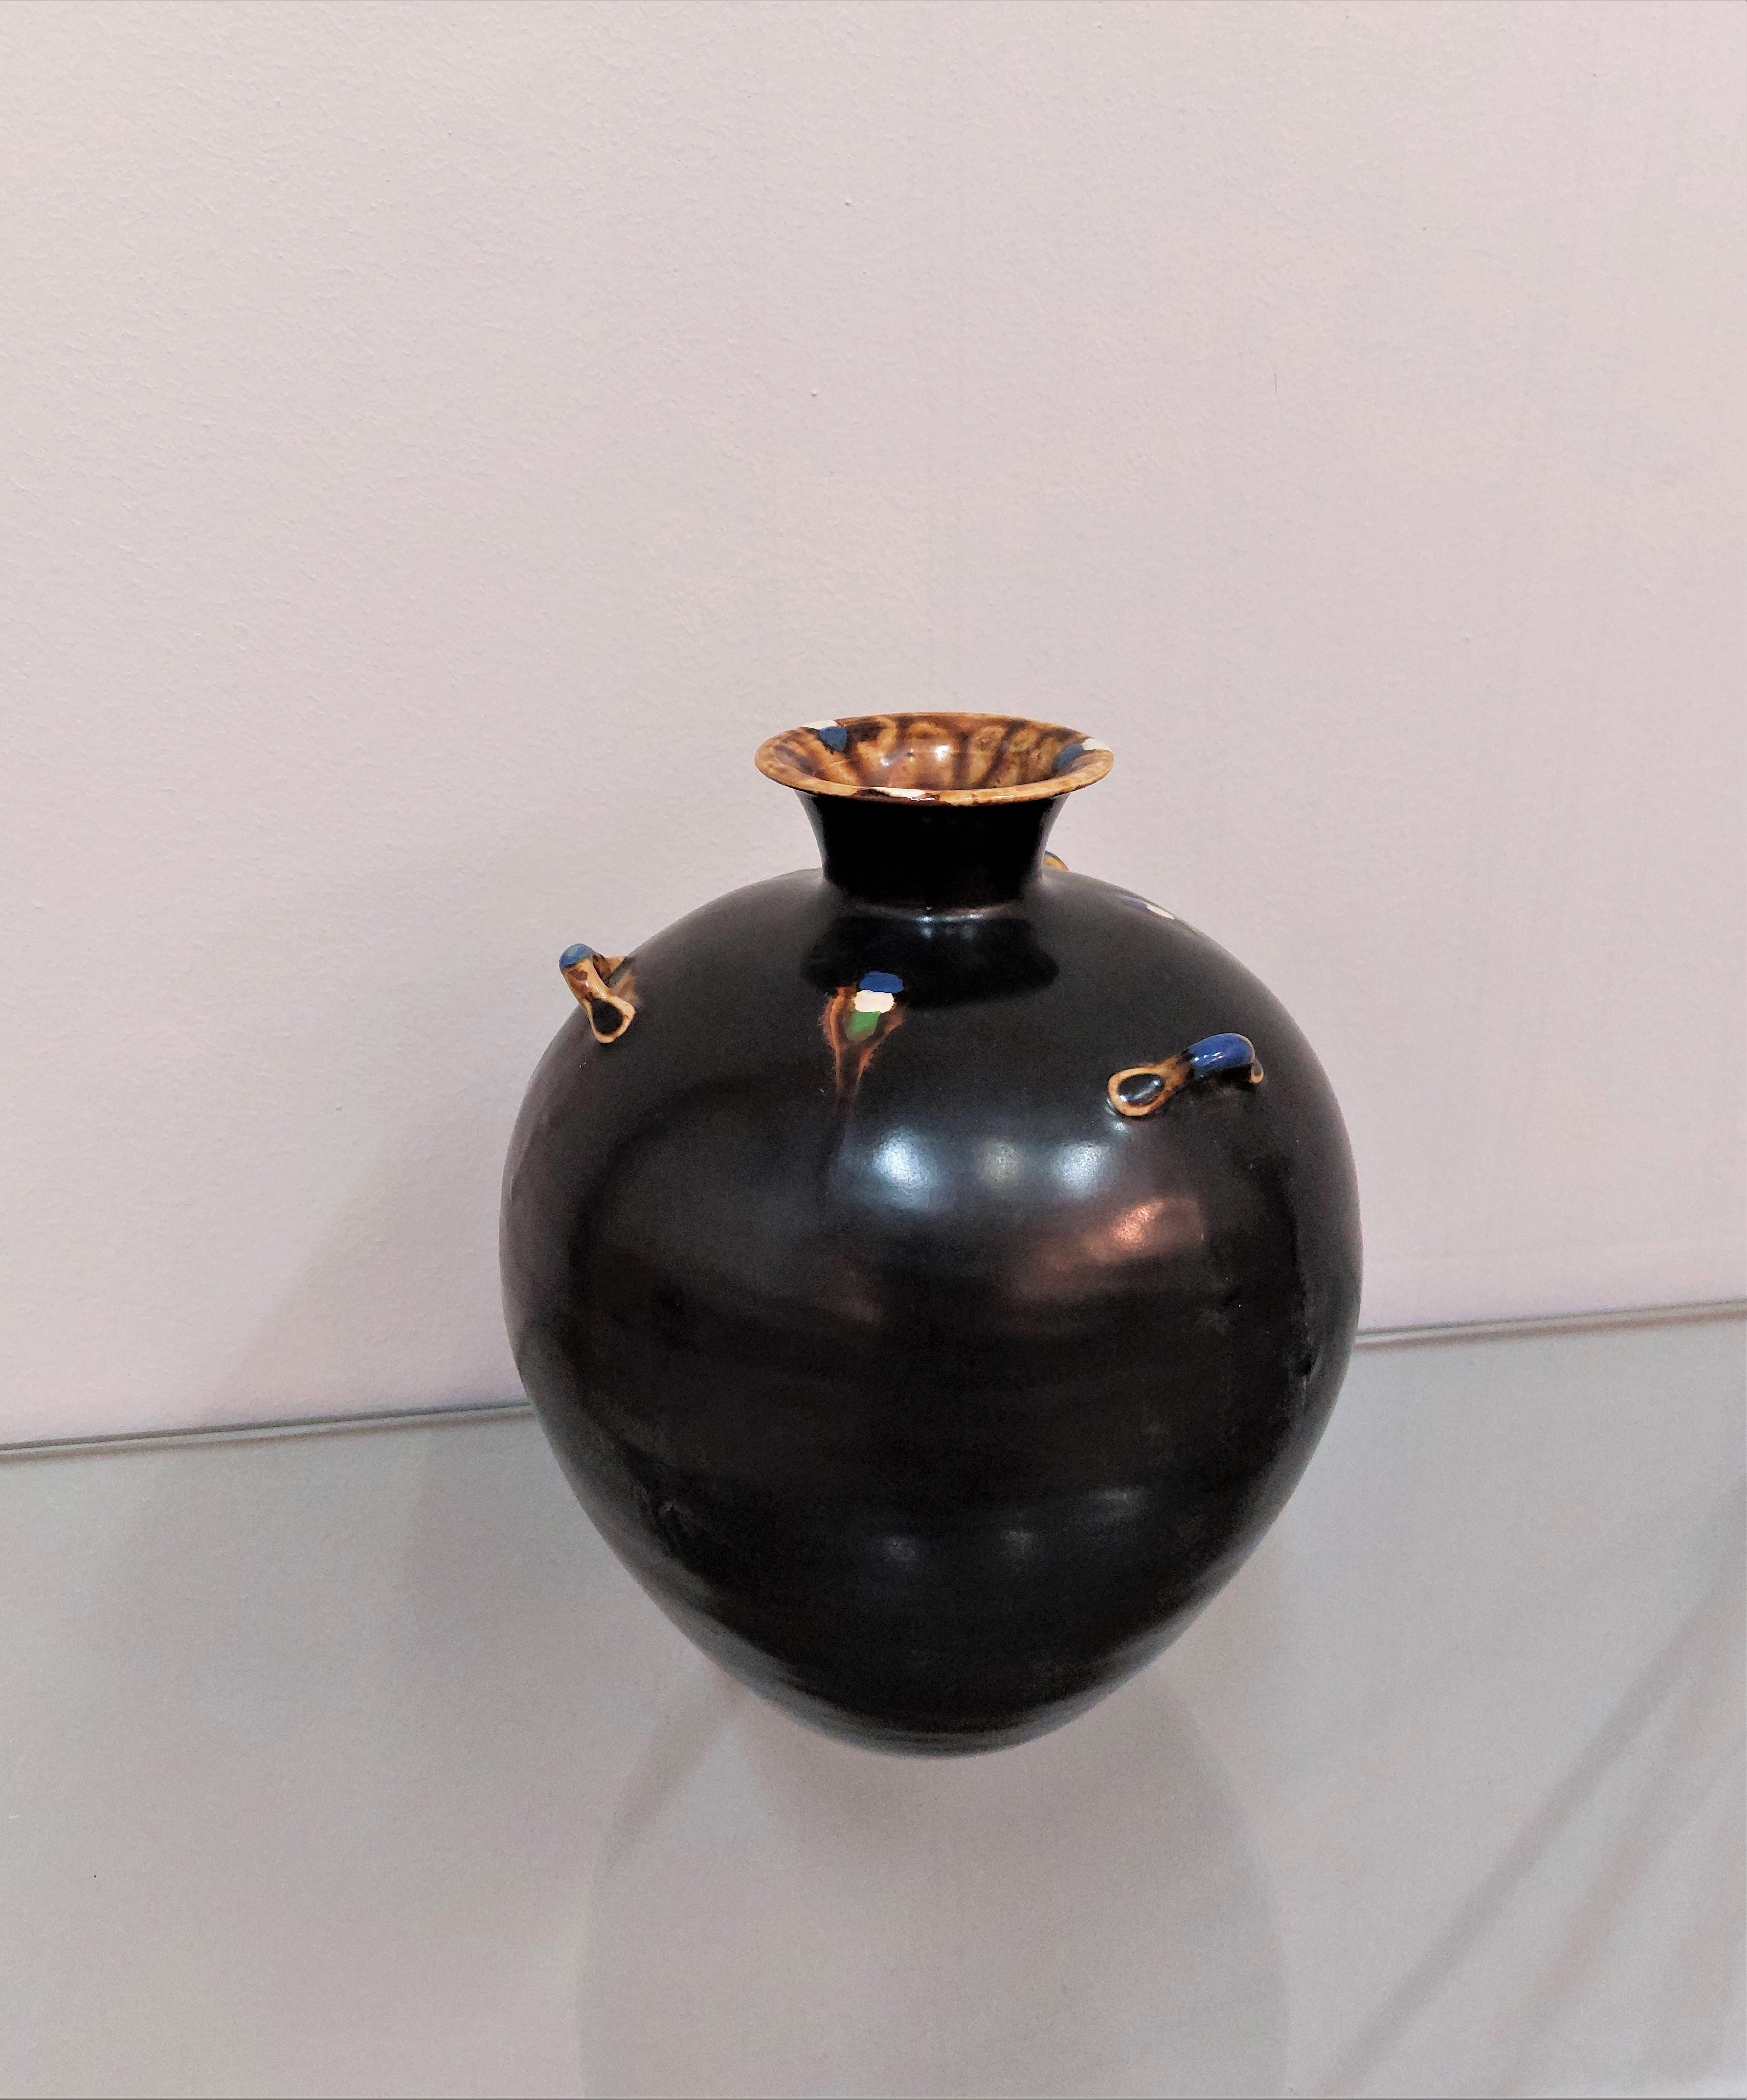 Decorative Object Ceramic Vase Enameled Black Midcentury Italian Design 1950s For Sale